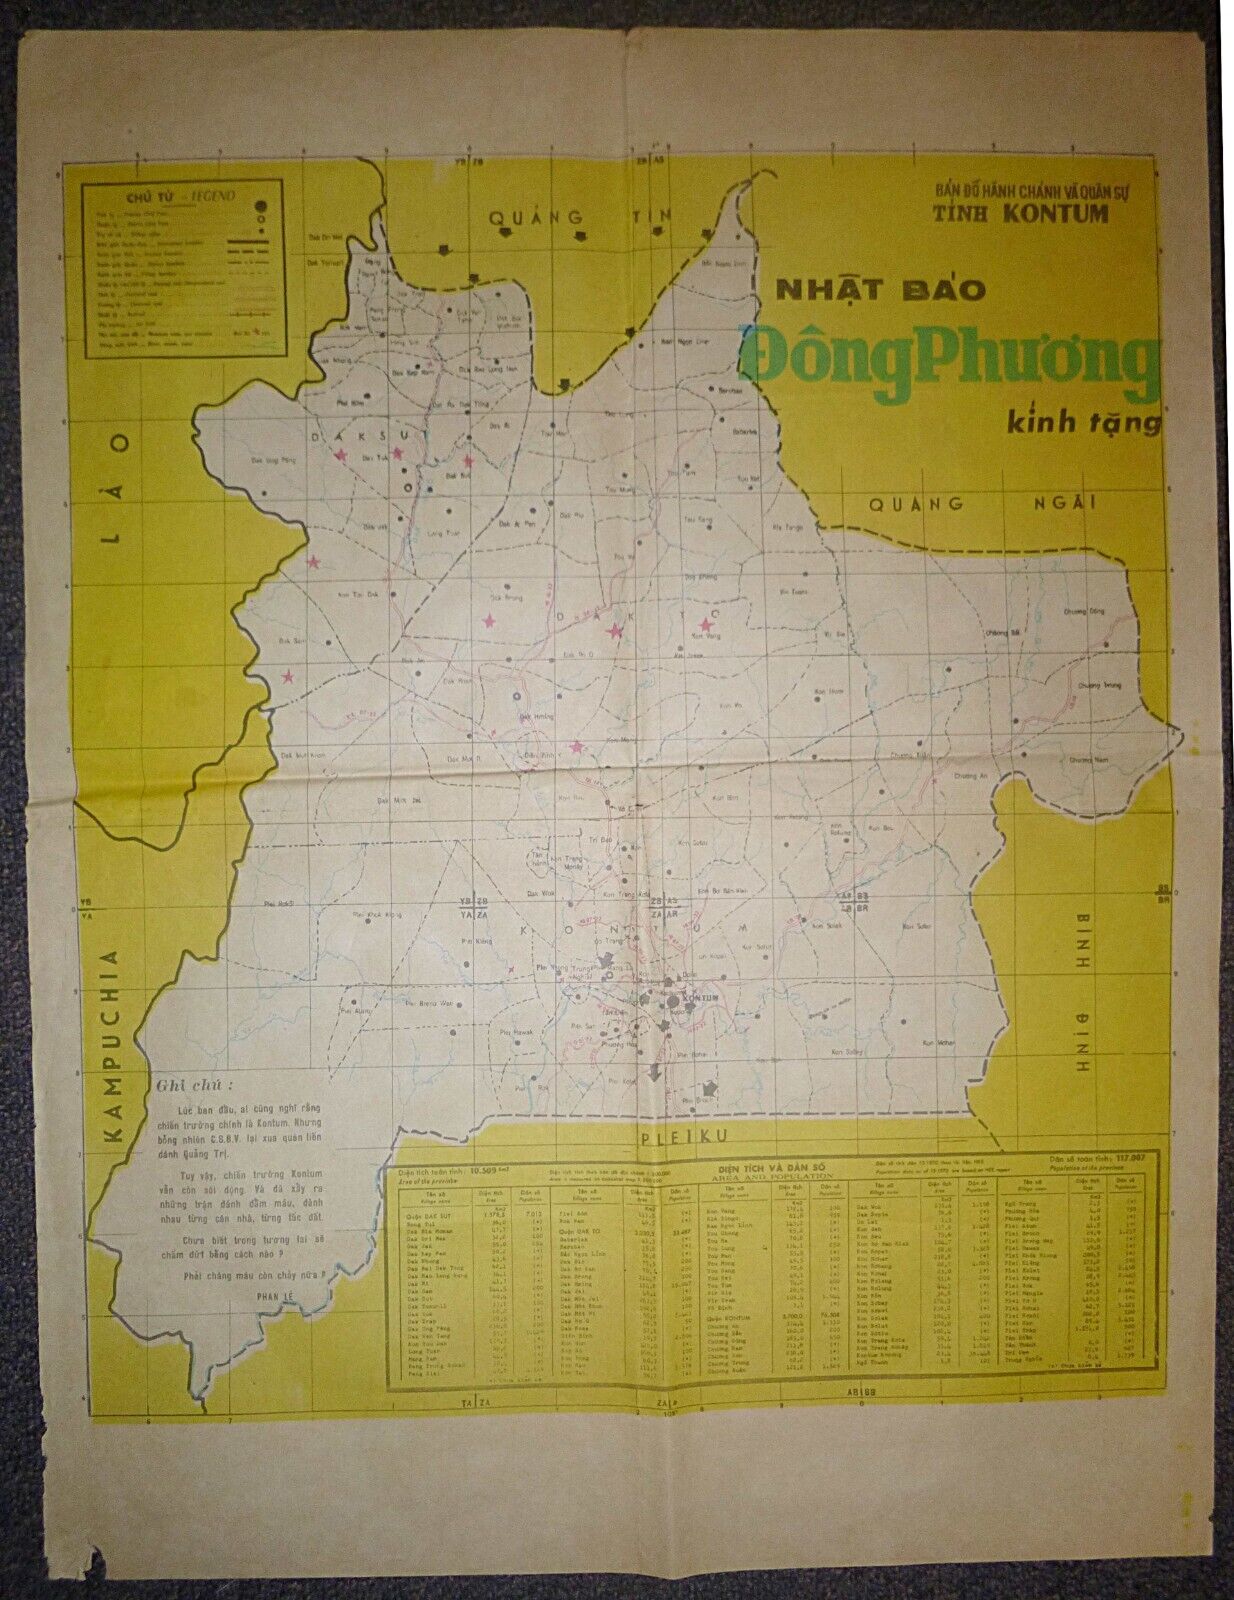 Rare 1970 Military Map - Ho Chi Minh Trail - Kontum, Laos, Camboia, Vietnam War